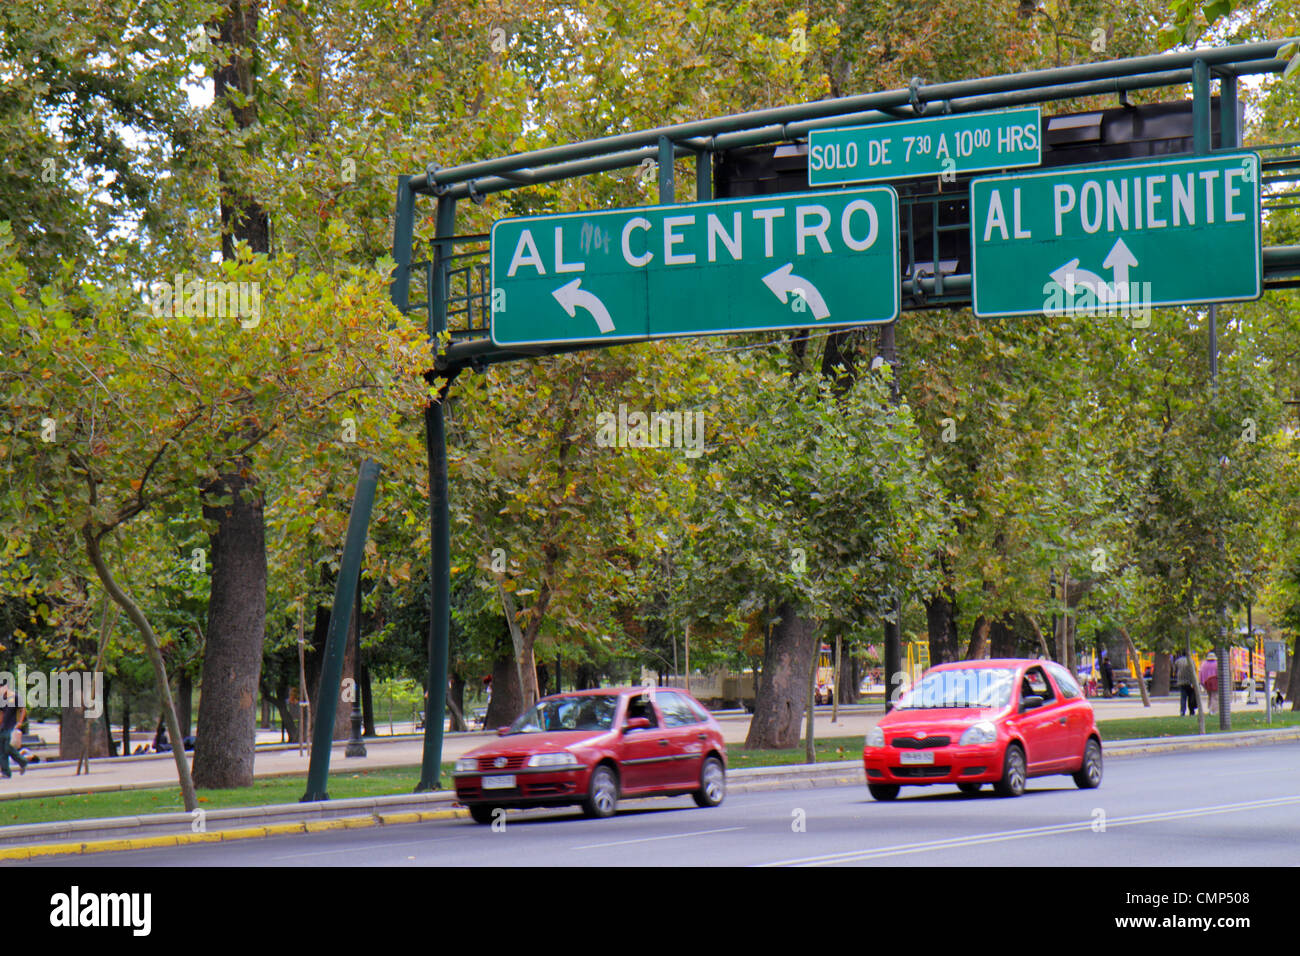 Santiago Chile,Providencia,Avenida Cardenal Jose Maria Caro,Parque Forestal,urban park,street scene,traffic,road,sign,logo,direction,information,car c Stock Photo